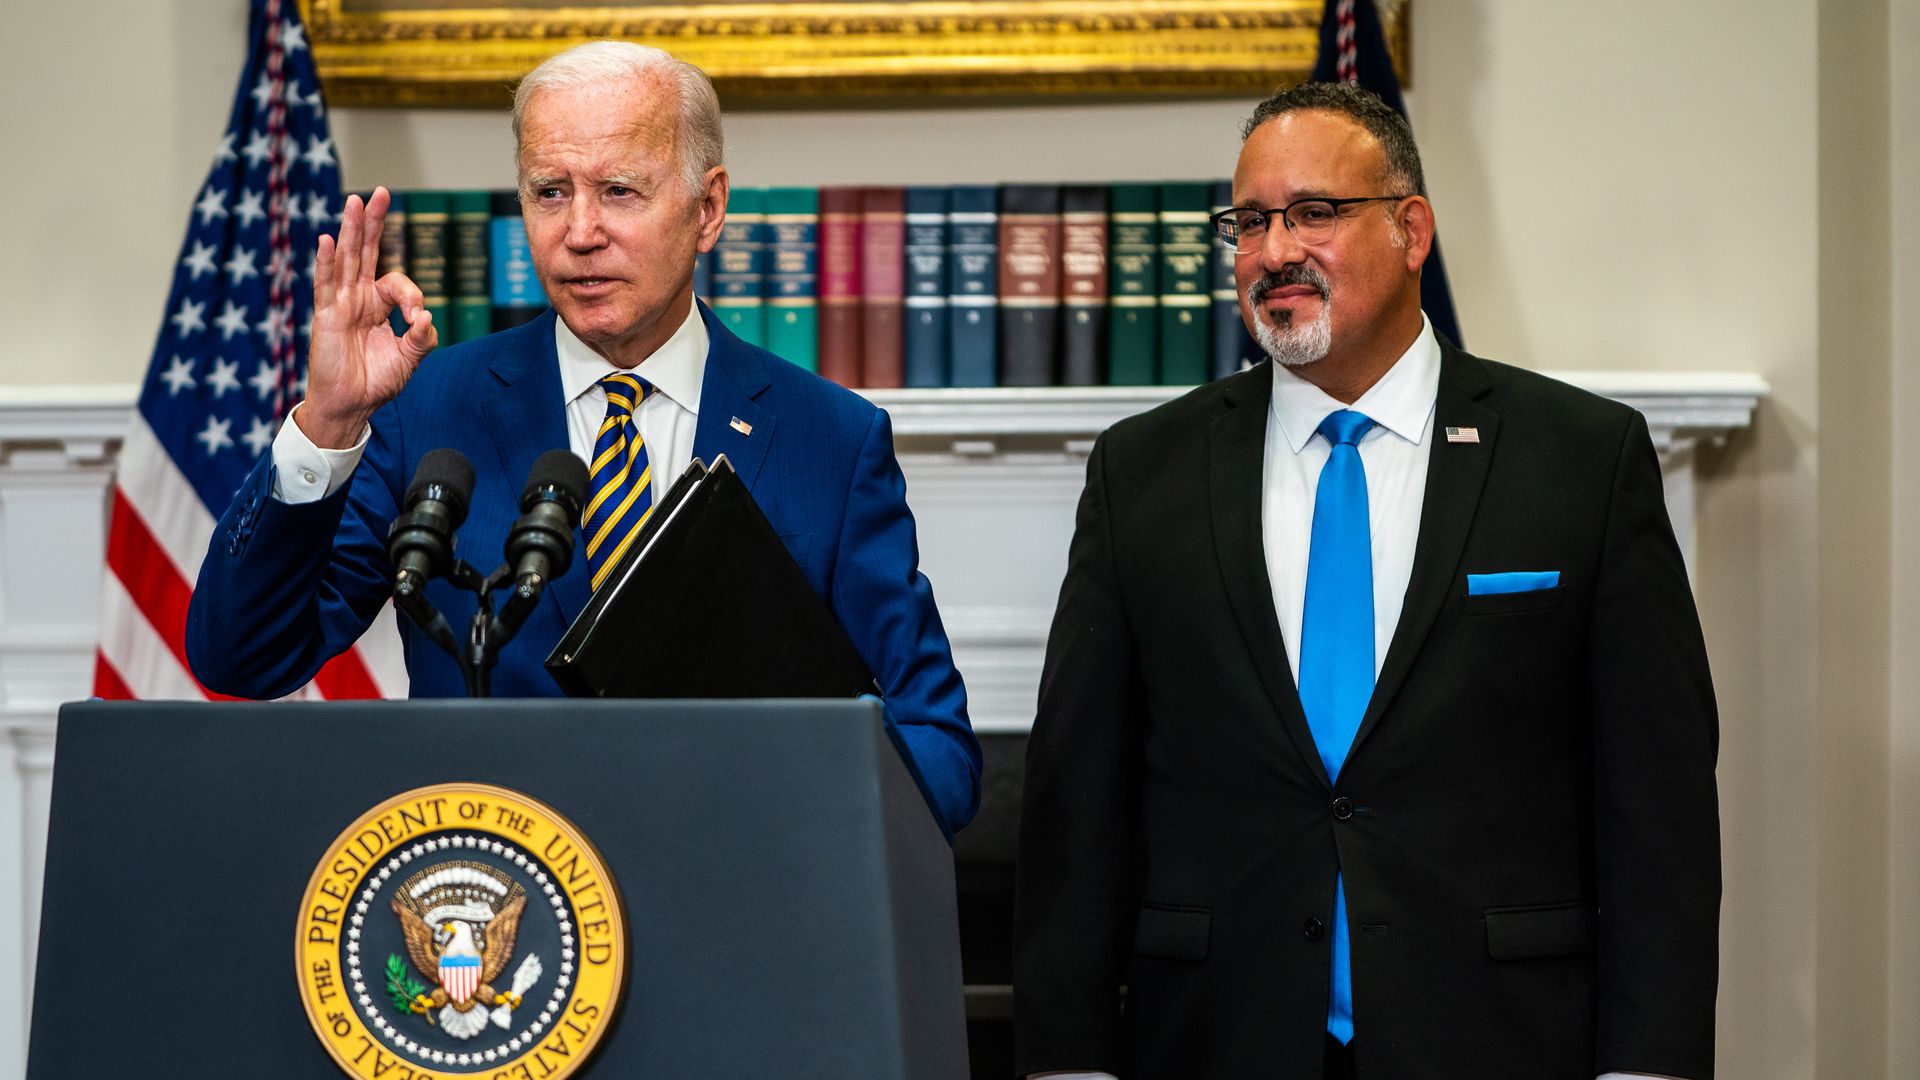  President Joe Biden delivers remarks regarding student loan debt forgiveness in the Roosevelt Room of the White House on Wednesday August 24, 2022.